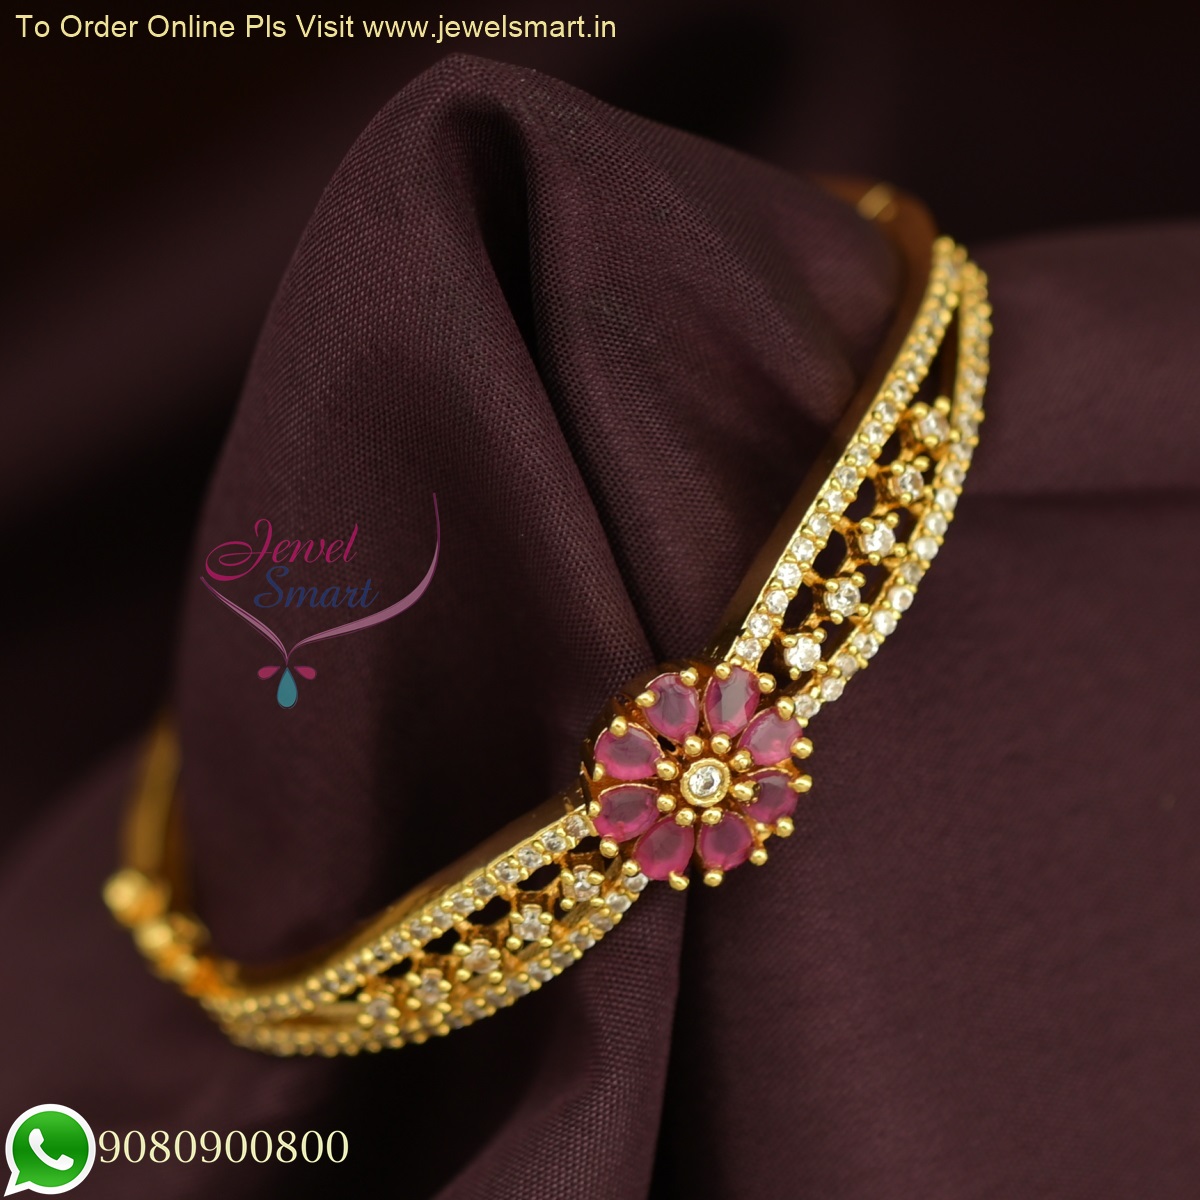 Buy quality Ladies Gold Bracelet-LB84 in Ahmedabad